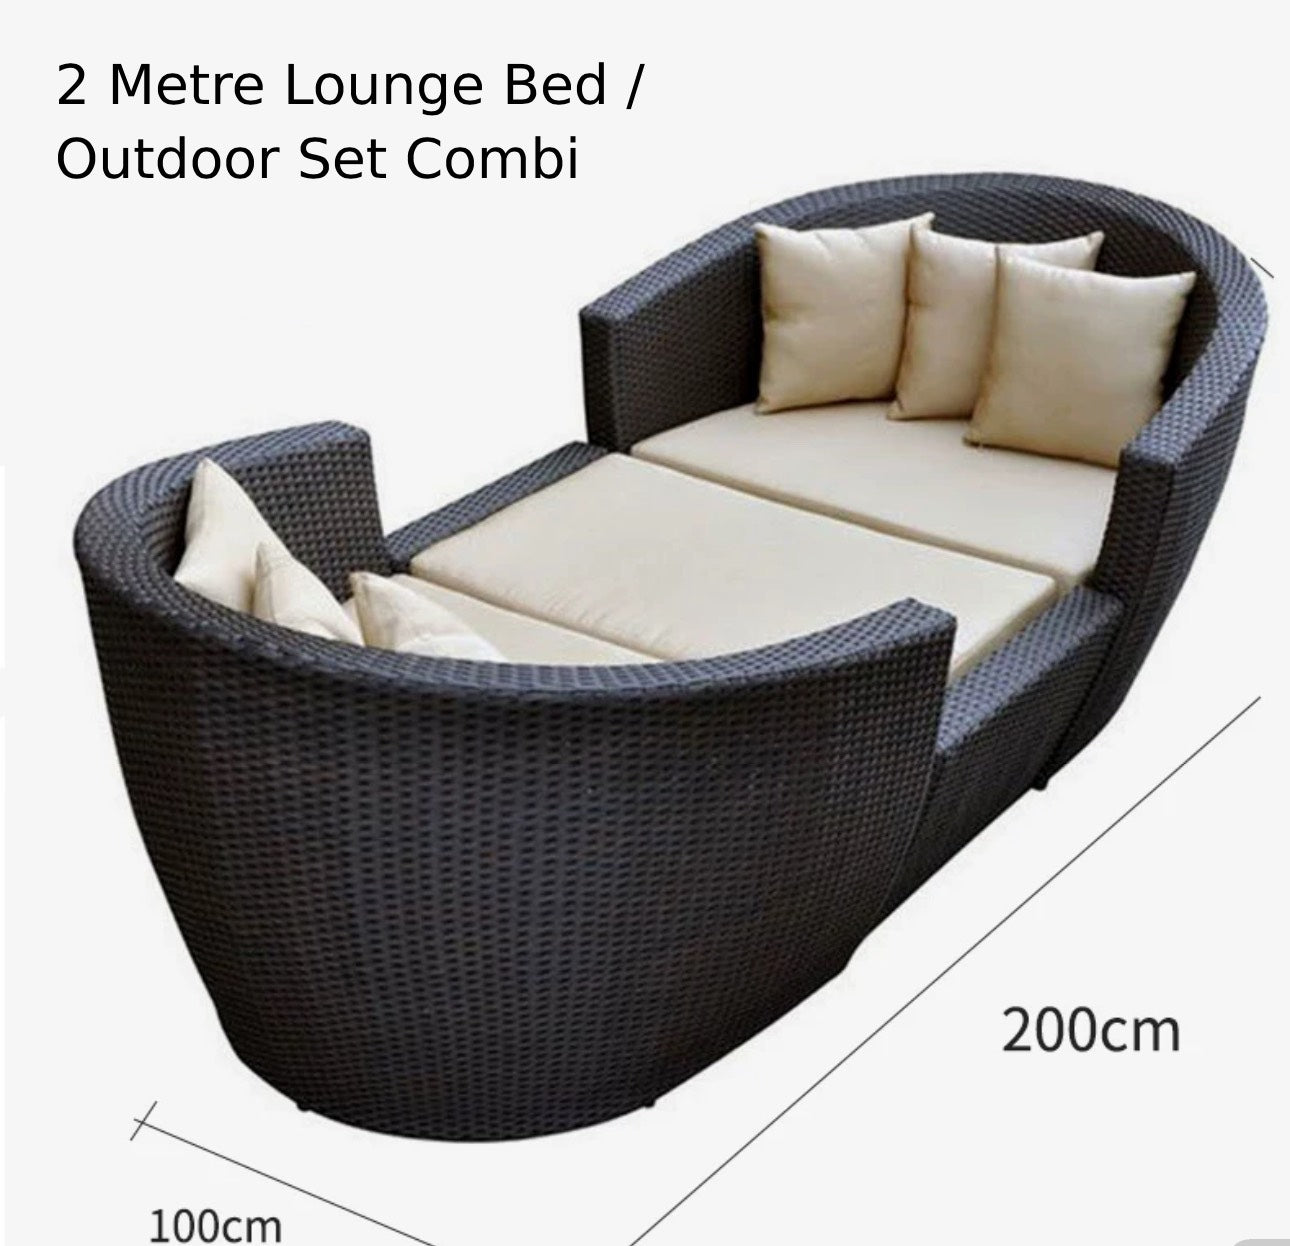 Multipurpose Lounge Chair